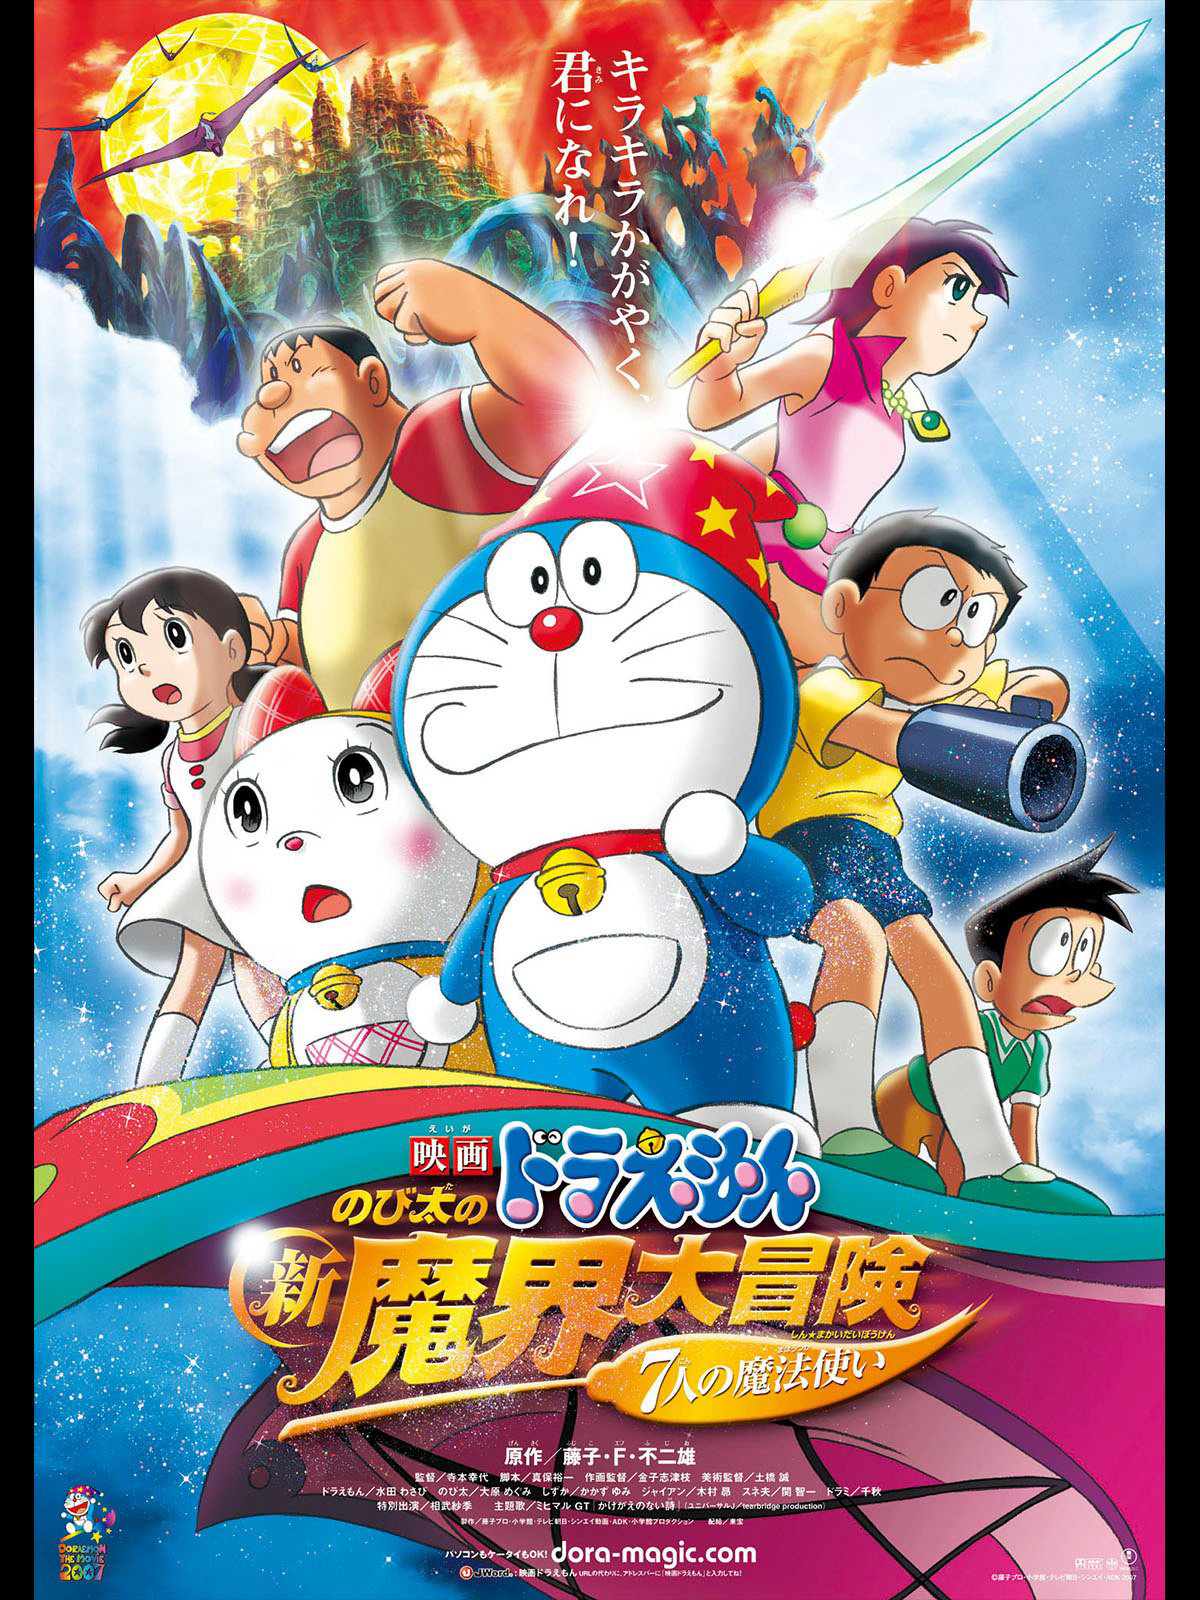 Poster Phim Doraemon the Movie: Nobita's New Great Adventure into the Underworld (Doraemon the Movie: Nobita's New Great Adventure into the Underworld)